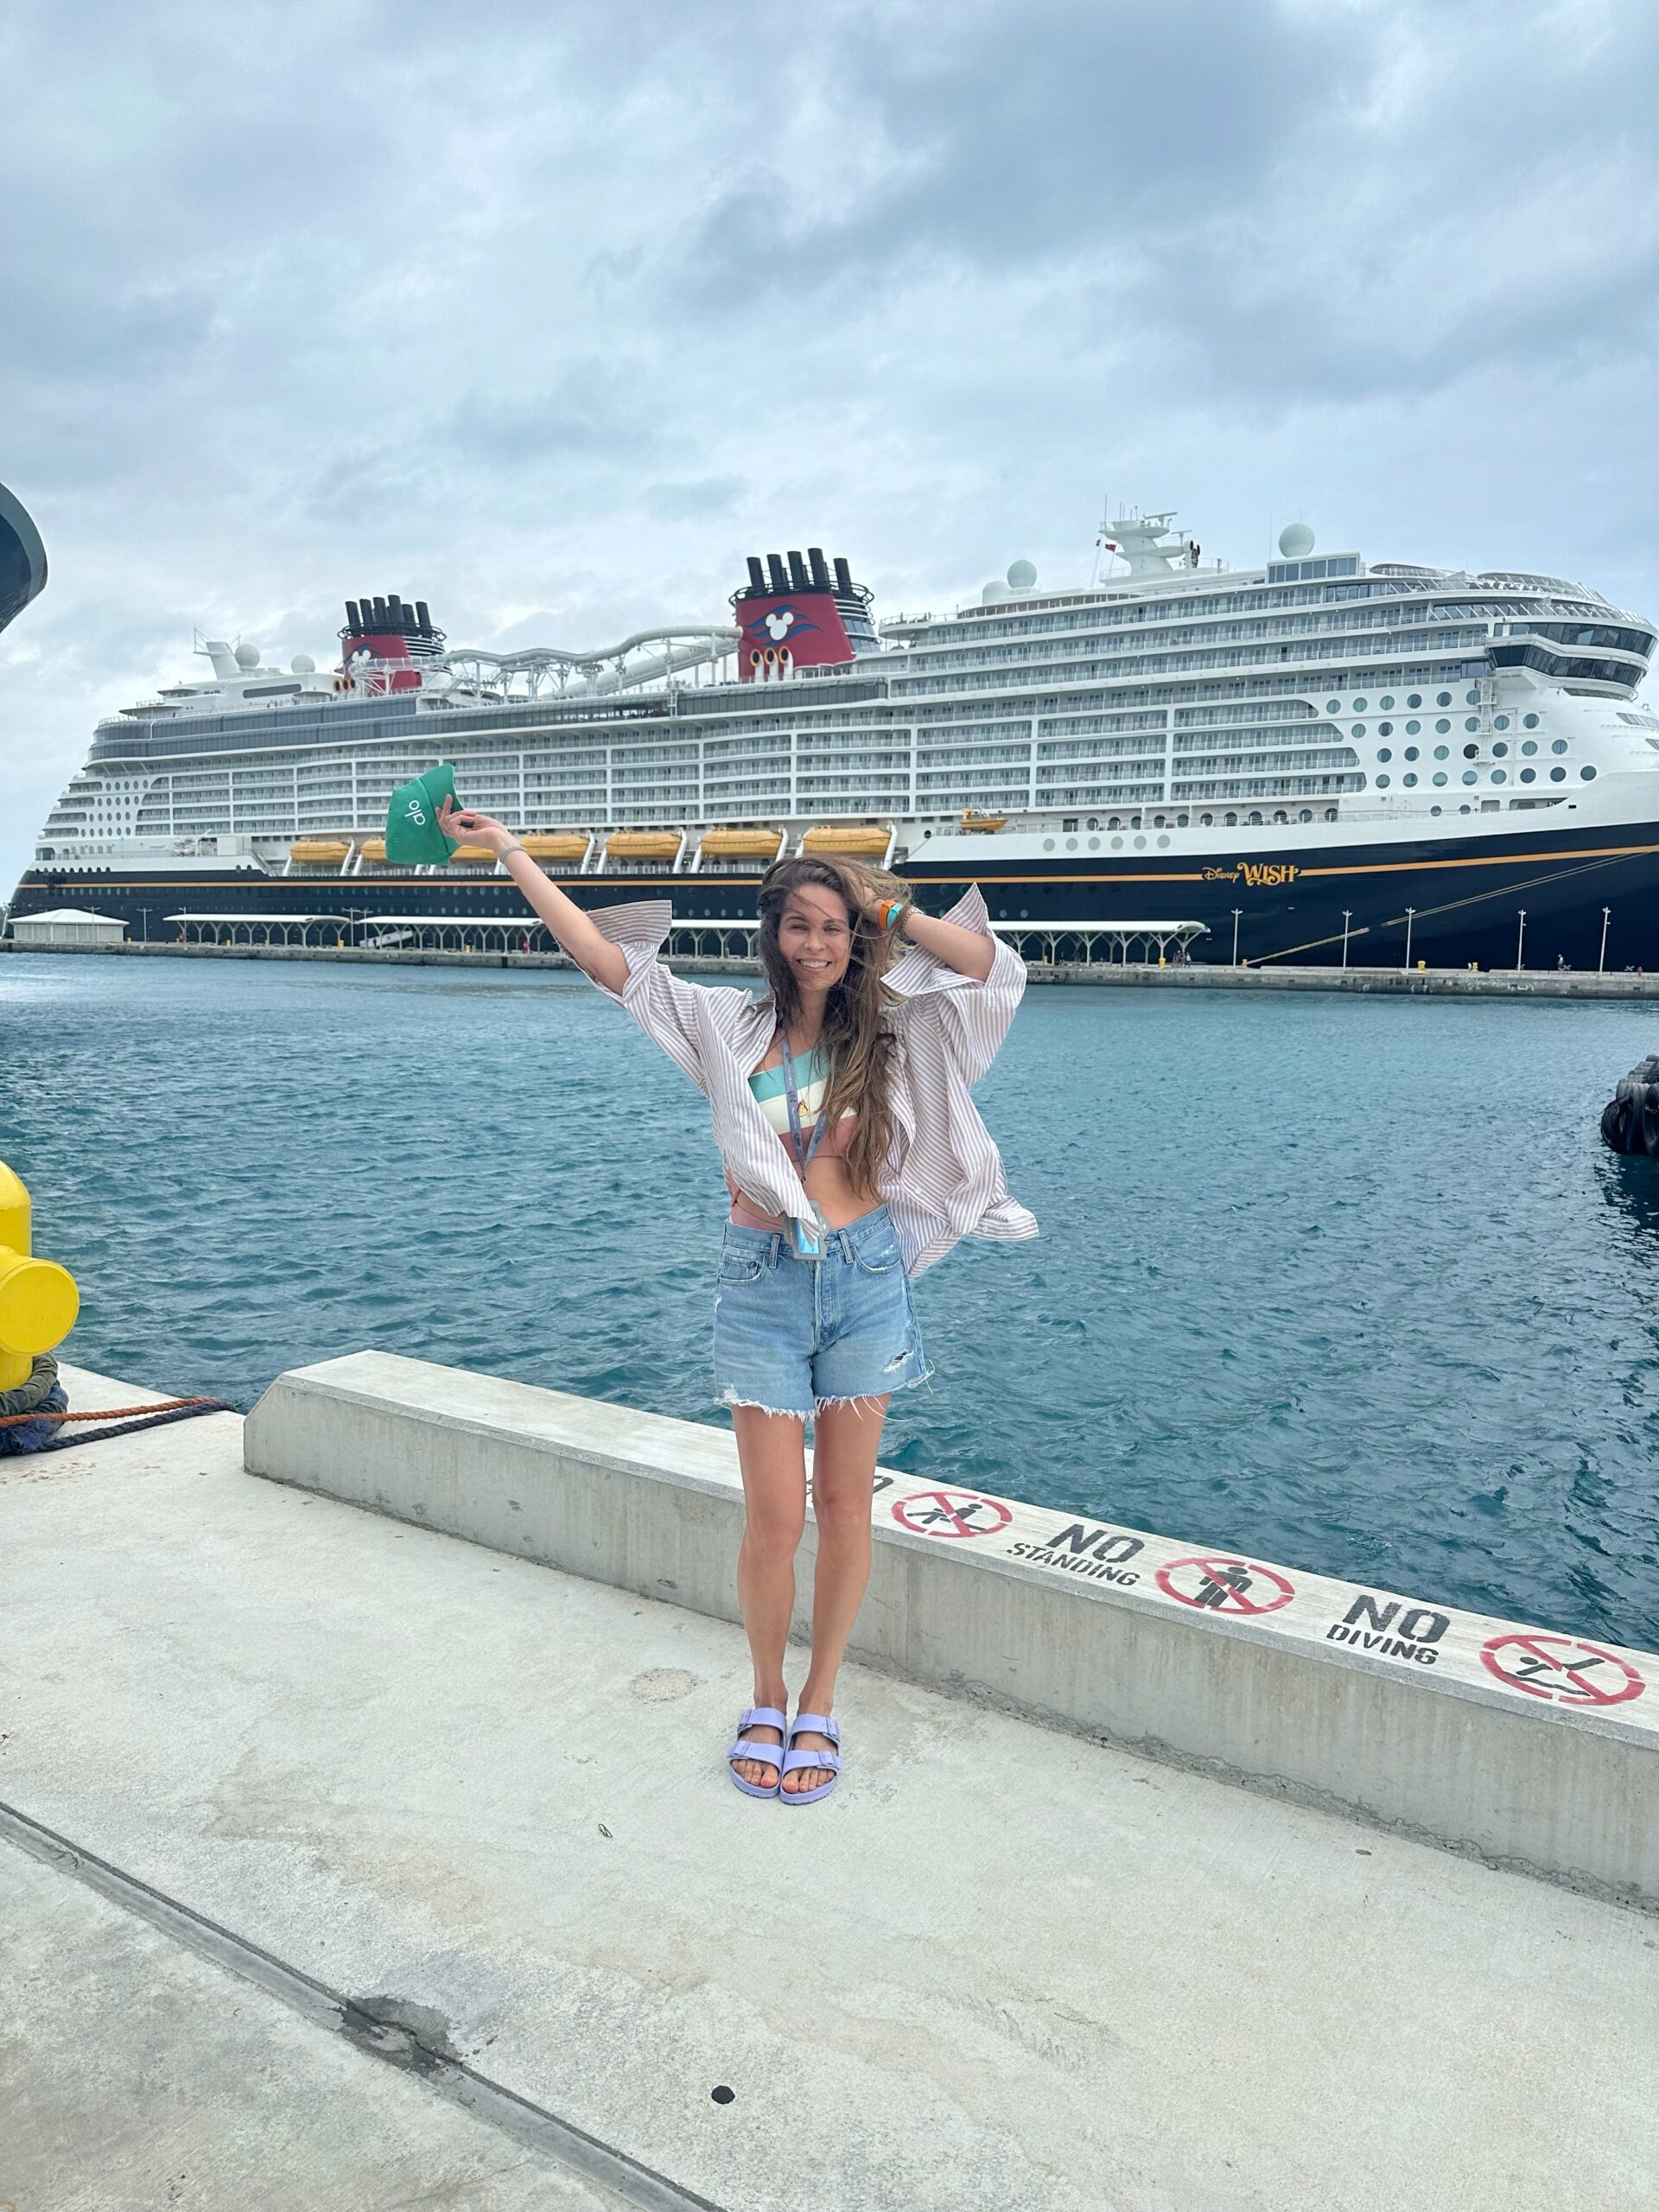 Disney Wish cruise ship | We Gotta Talk lifestyle blog & podcast by Sonni Abatta